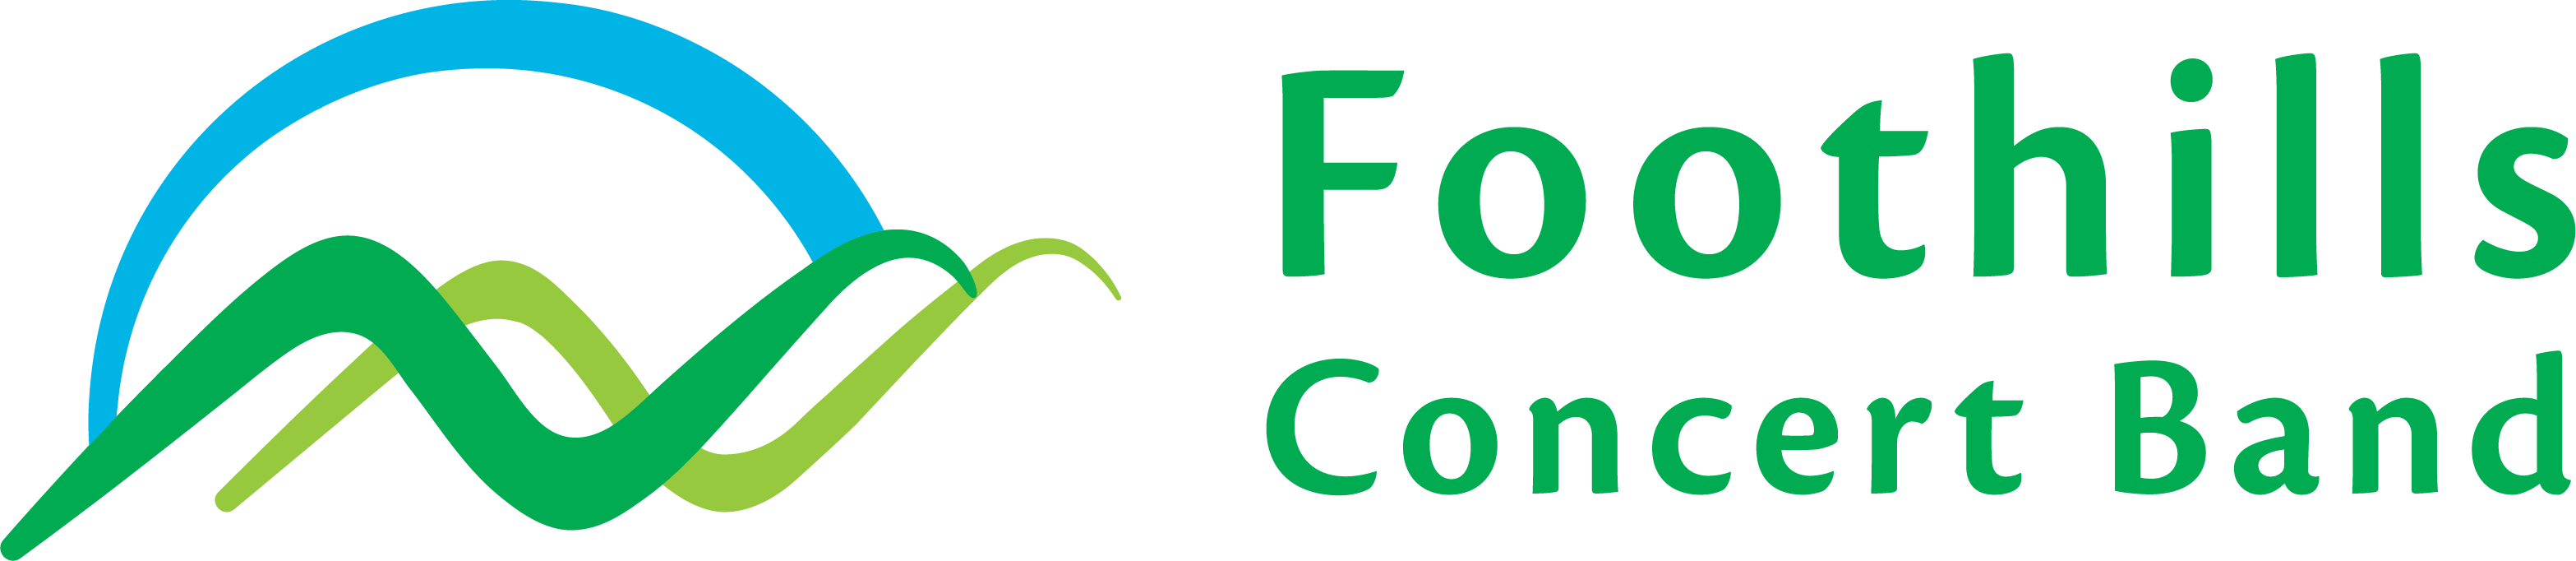 Logo - Foothills Concert Band (3134x682)